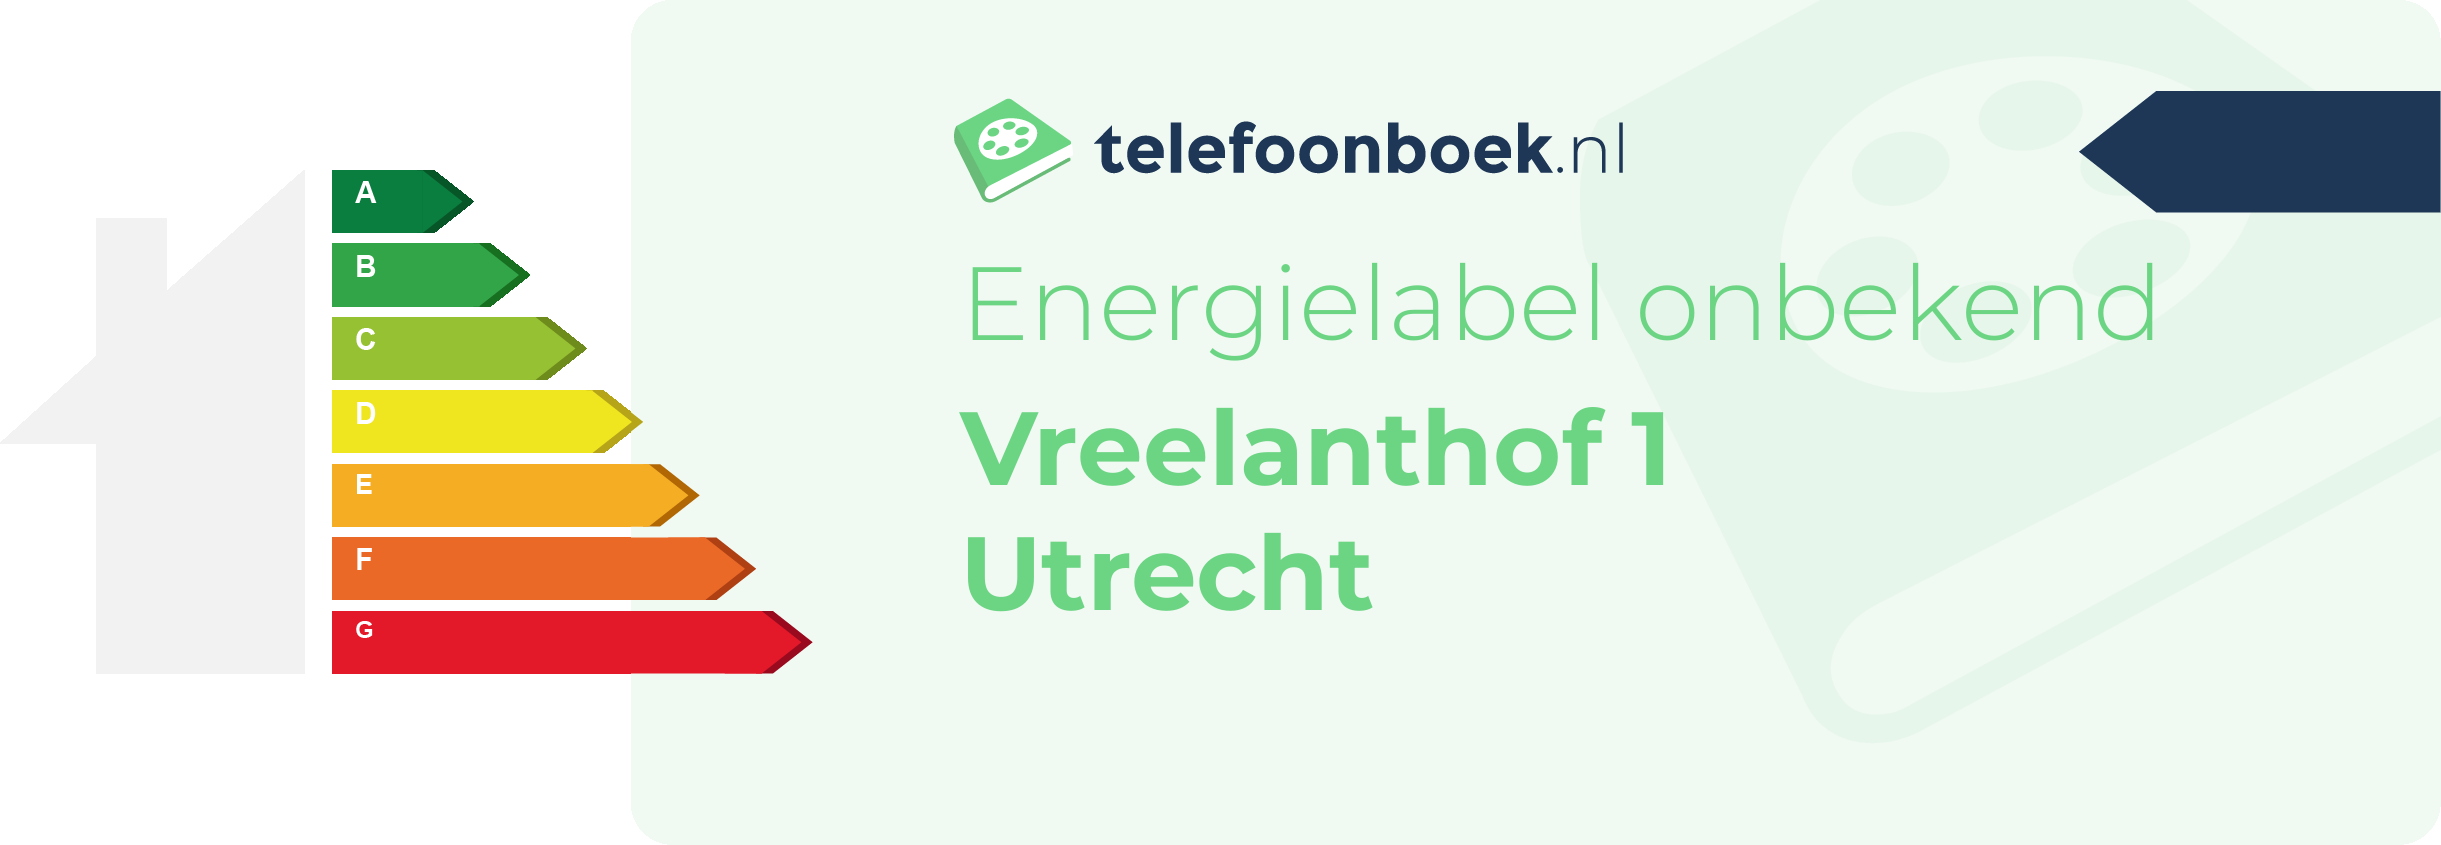 Energielabel Vreelanthof 1 Utrecht